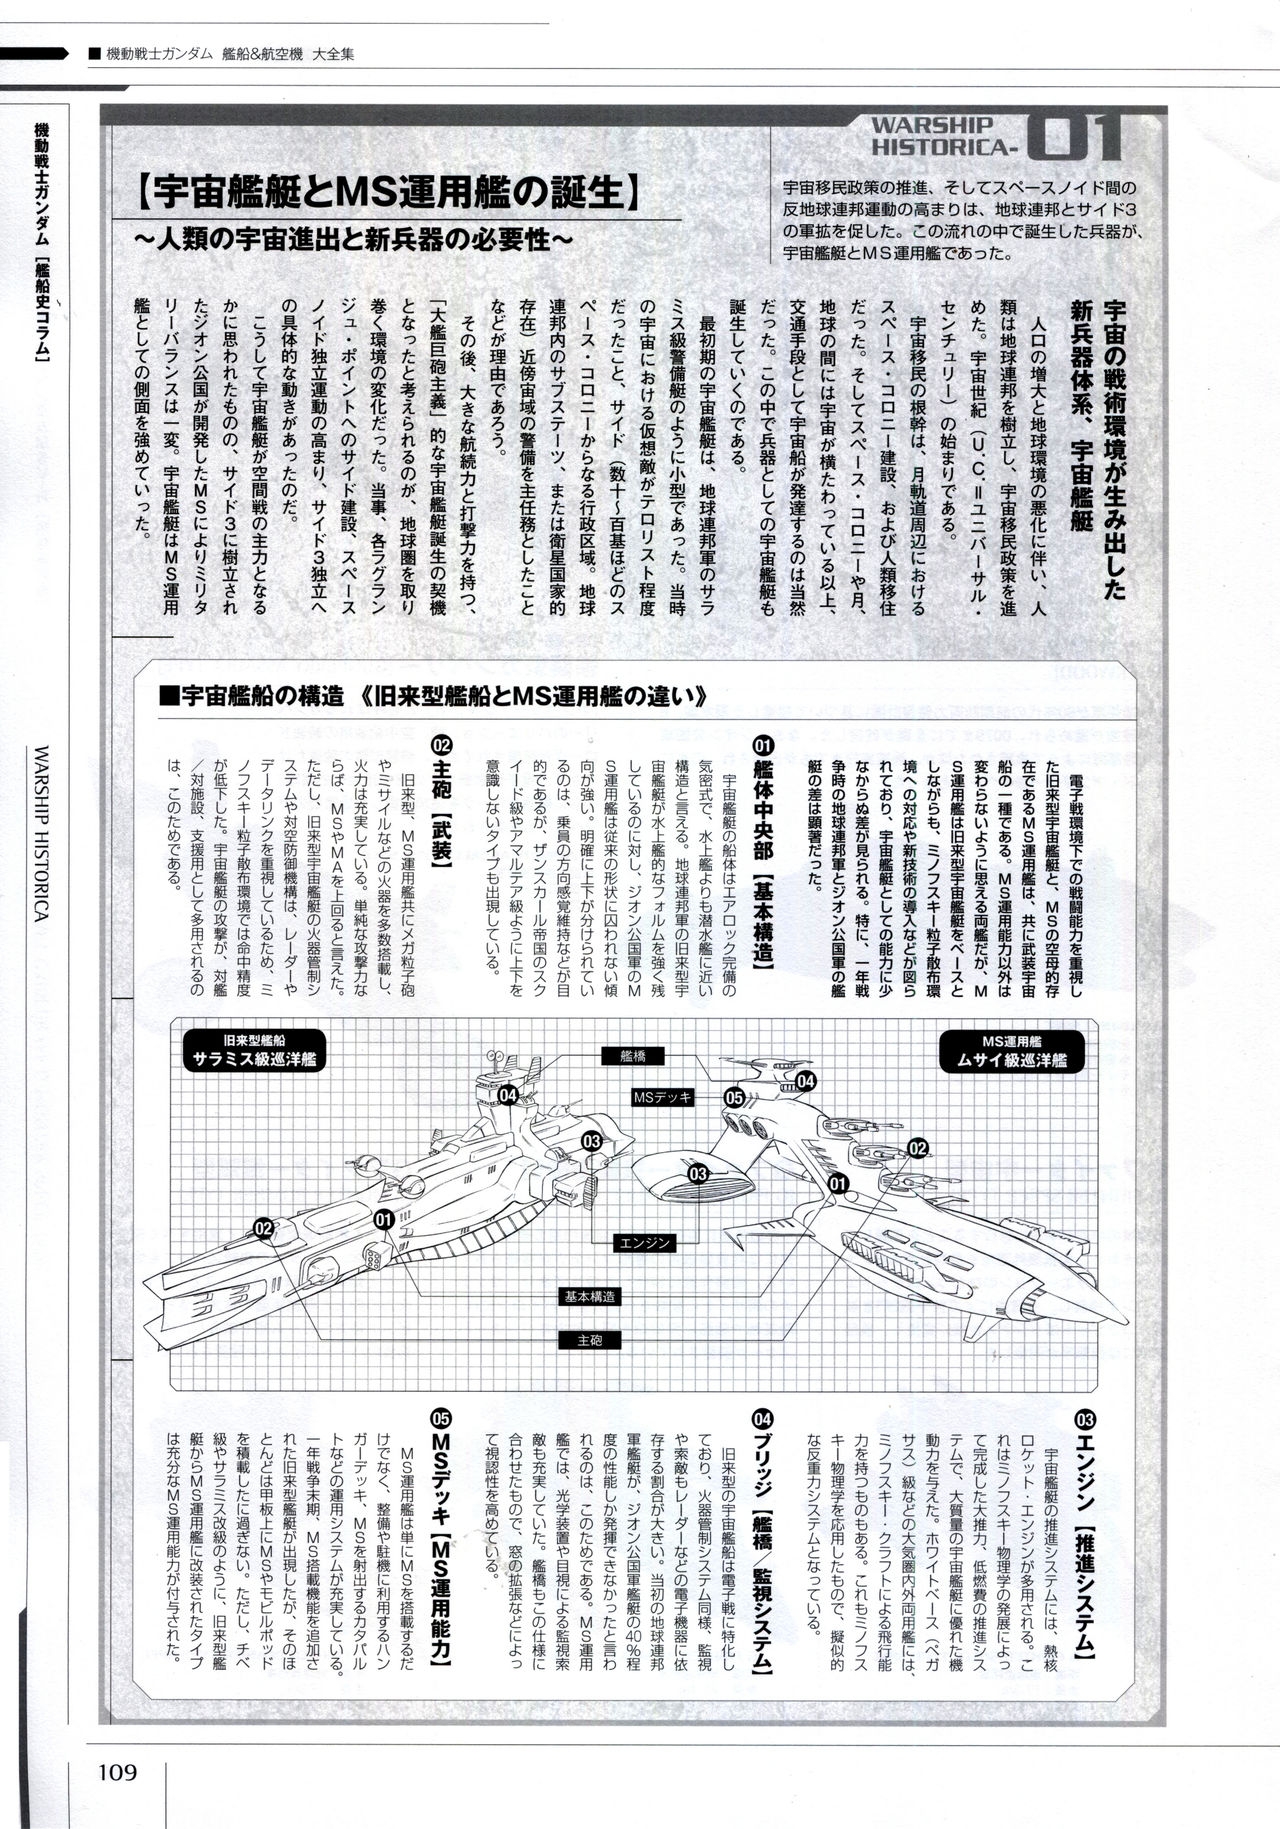 Mobile Suit Gundam - Ship & Aerospace Plane Encyclopedia - Revised Edition 114